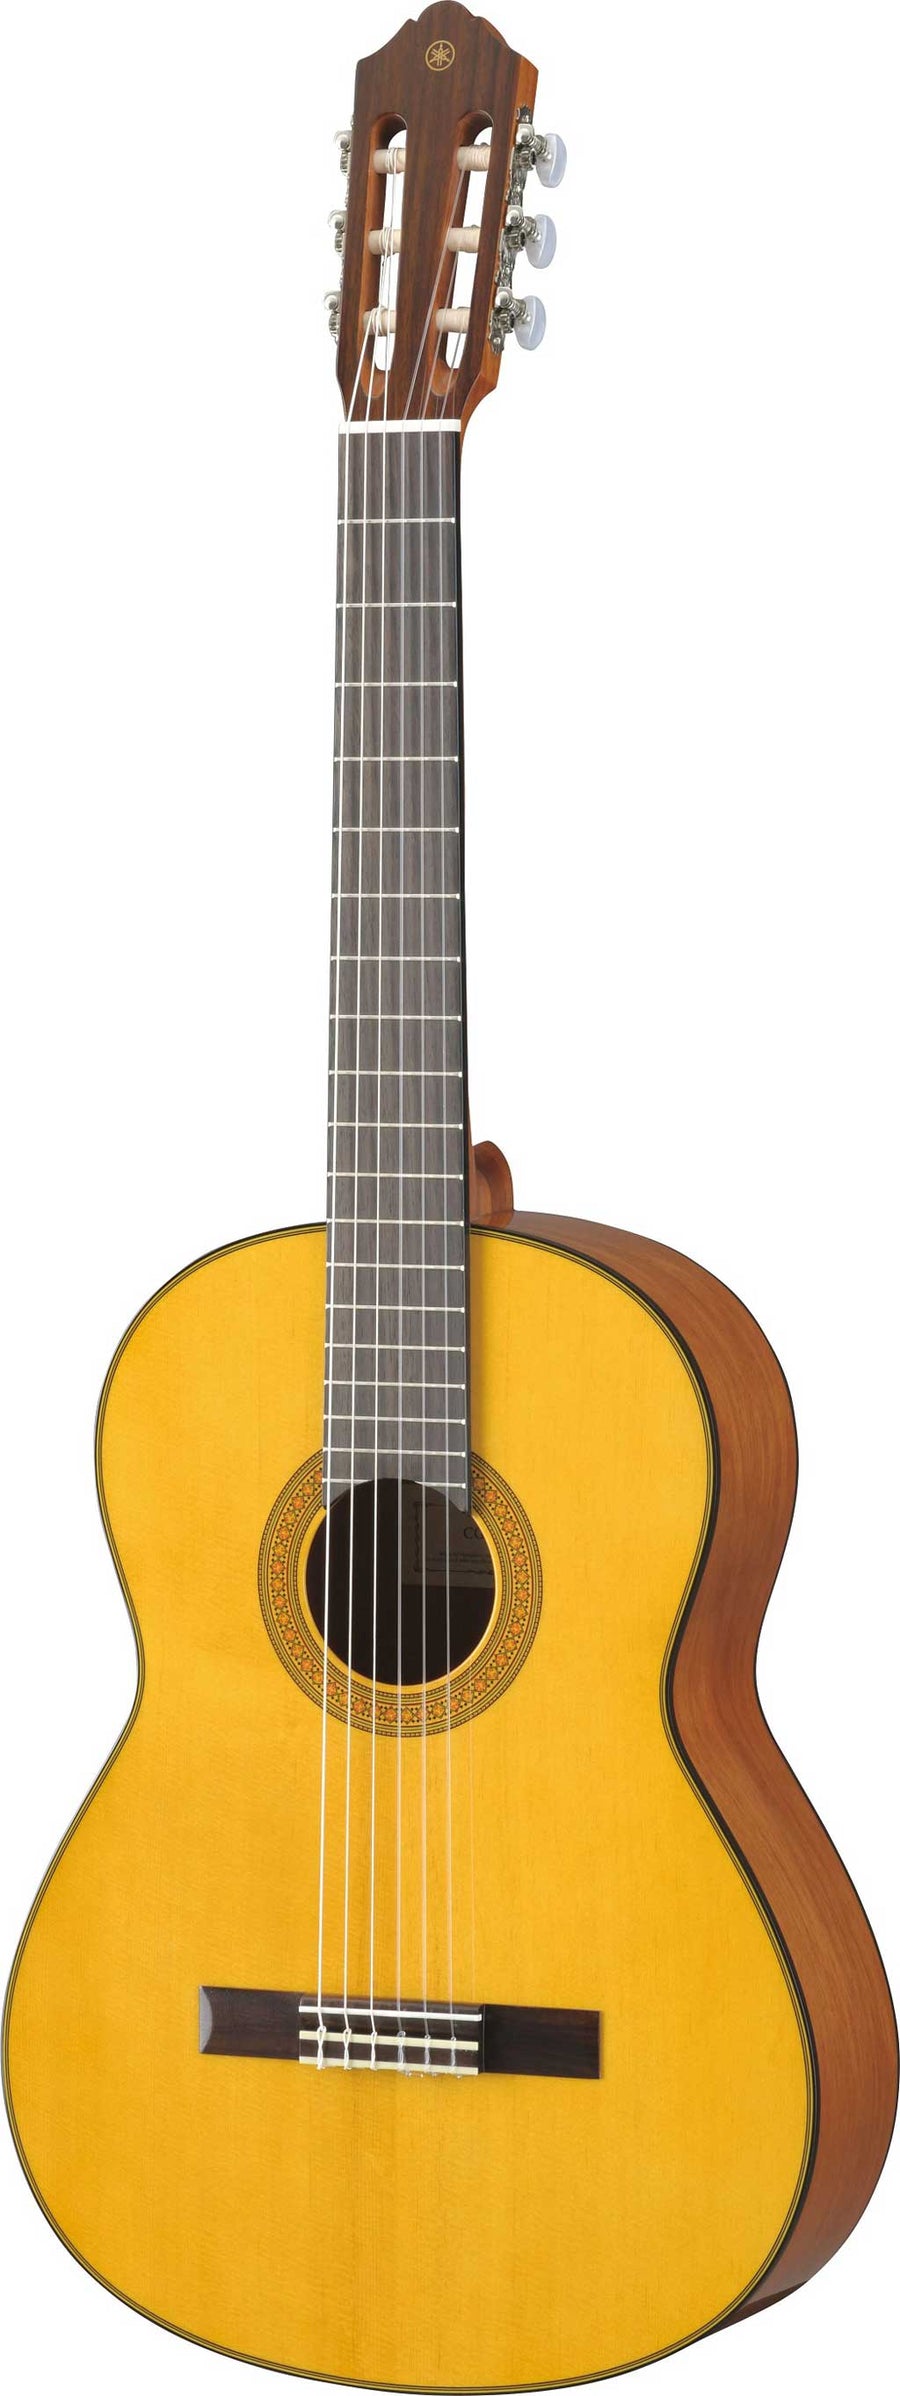 Yamaha CG142SH Classical Nylon String Acoustic Guitar